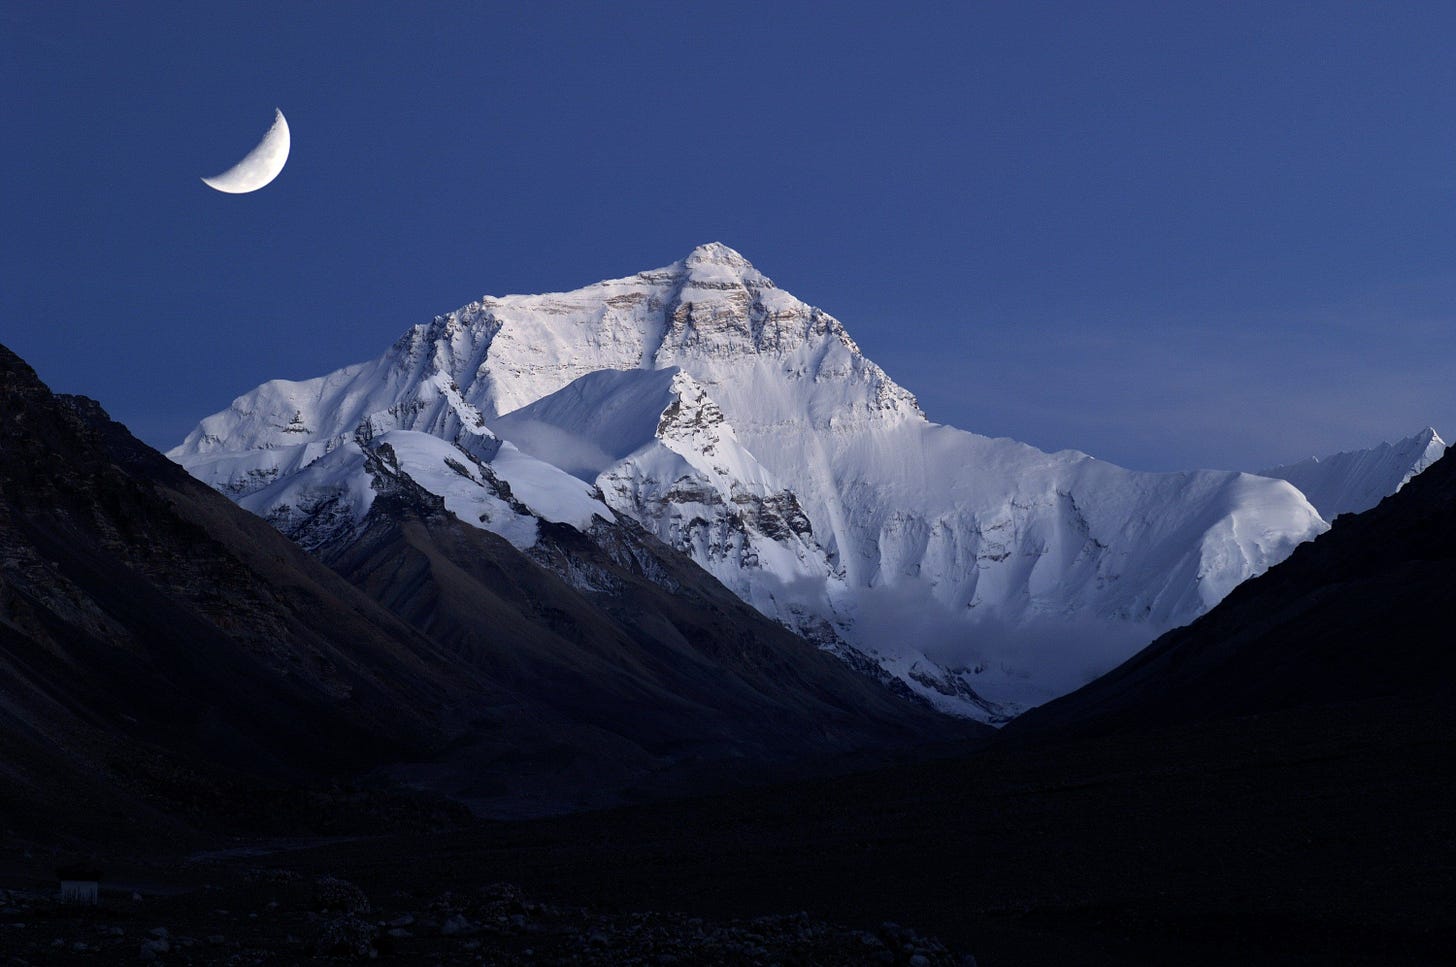 Everest At Night | Mount everest, Everest, Walking in nature